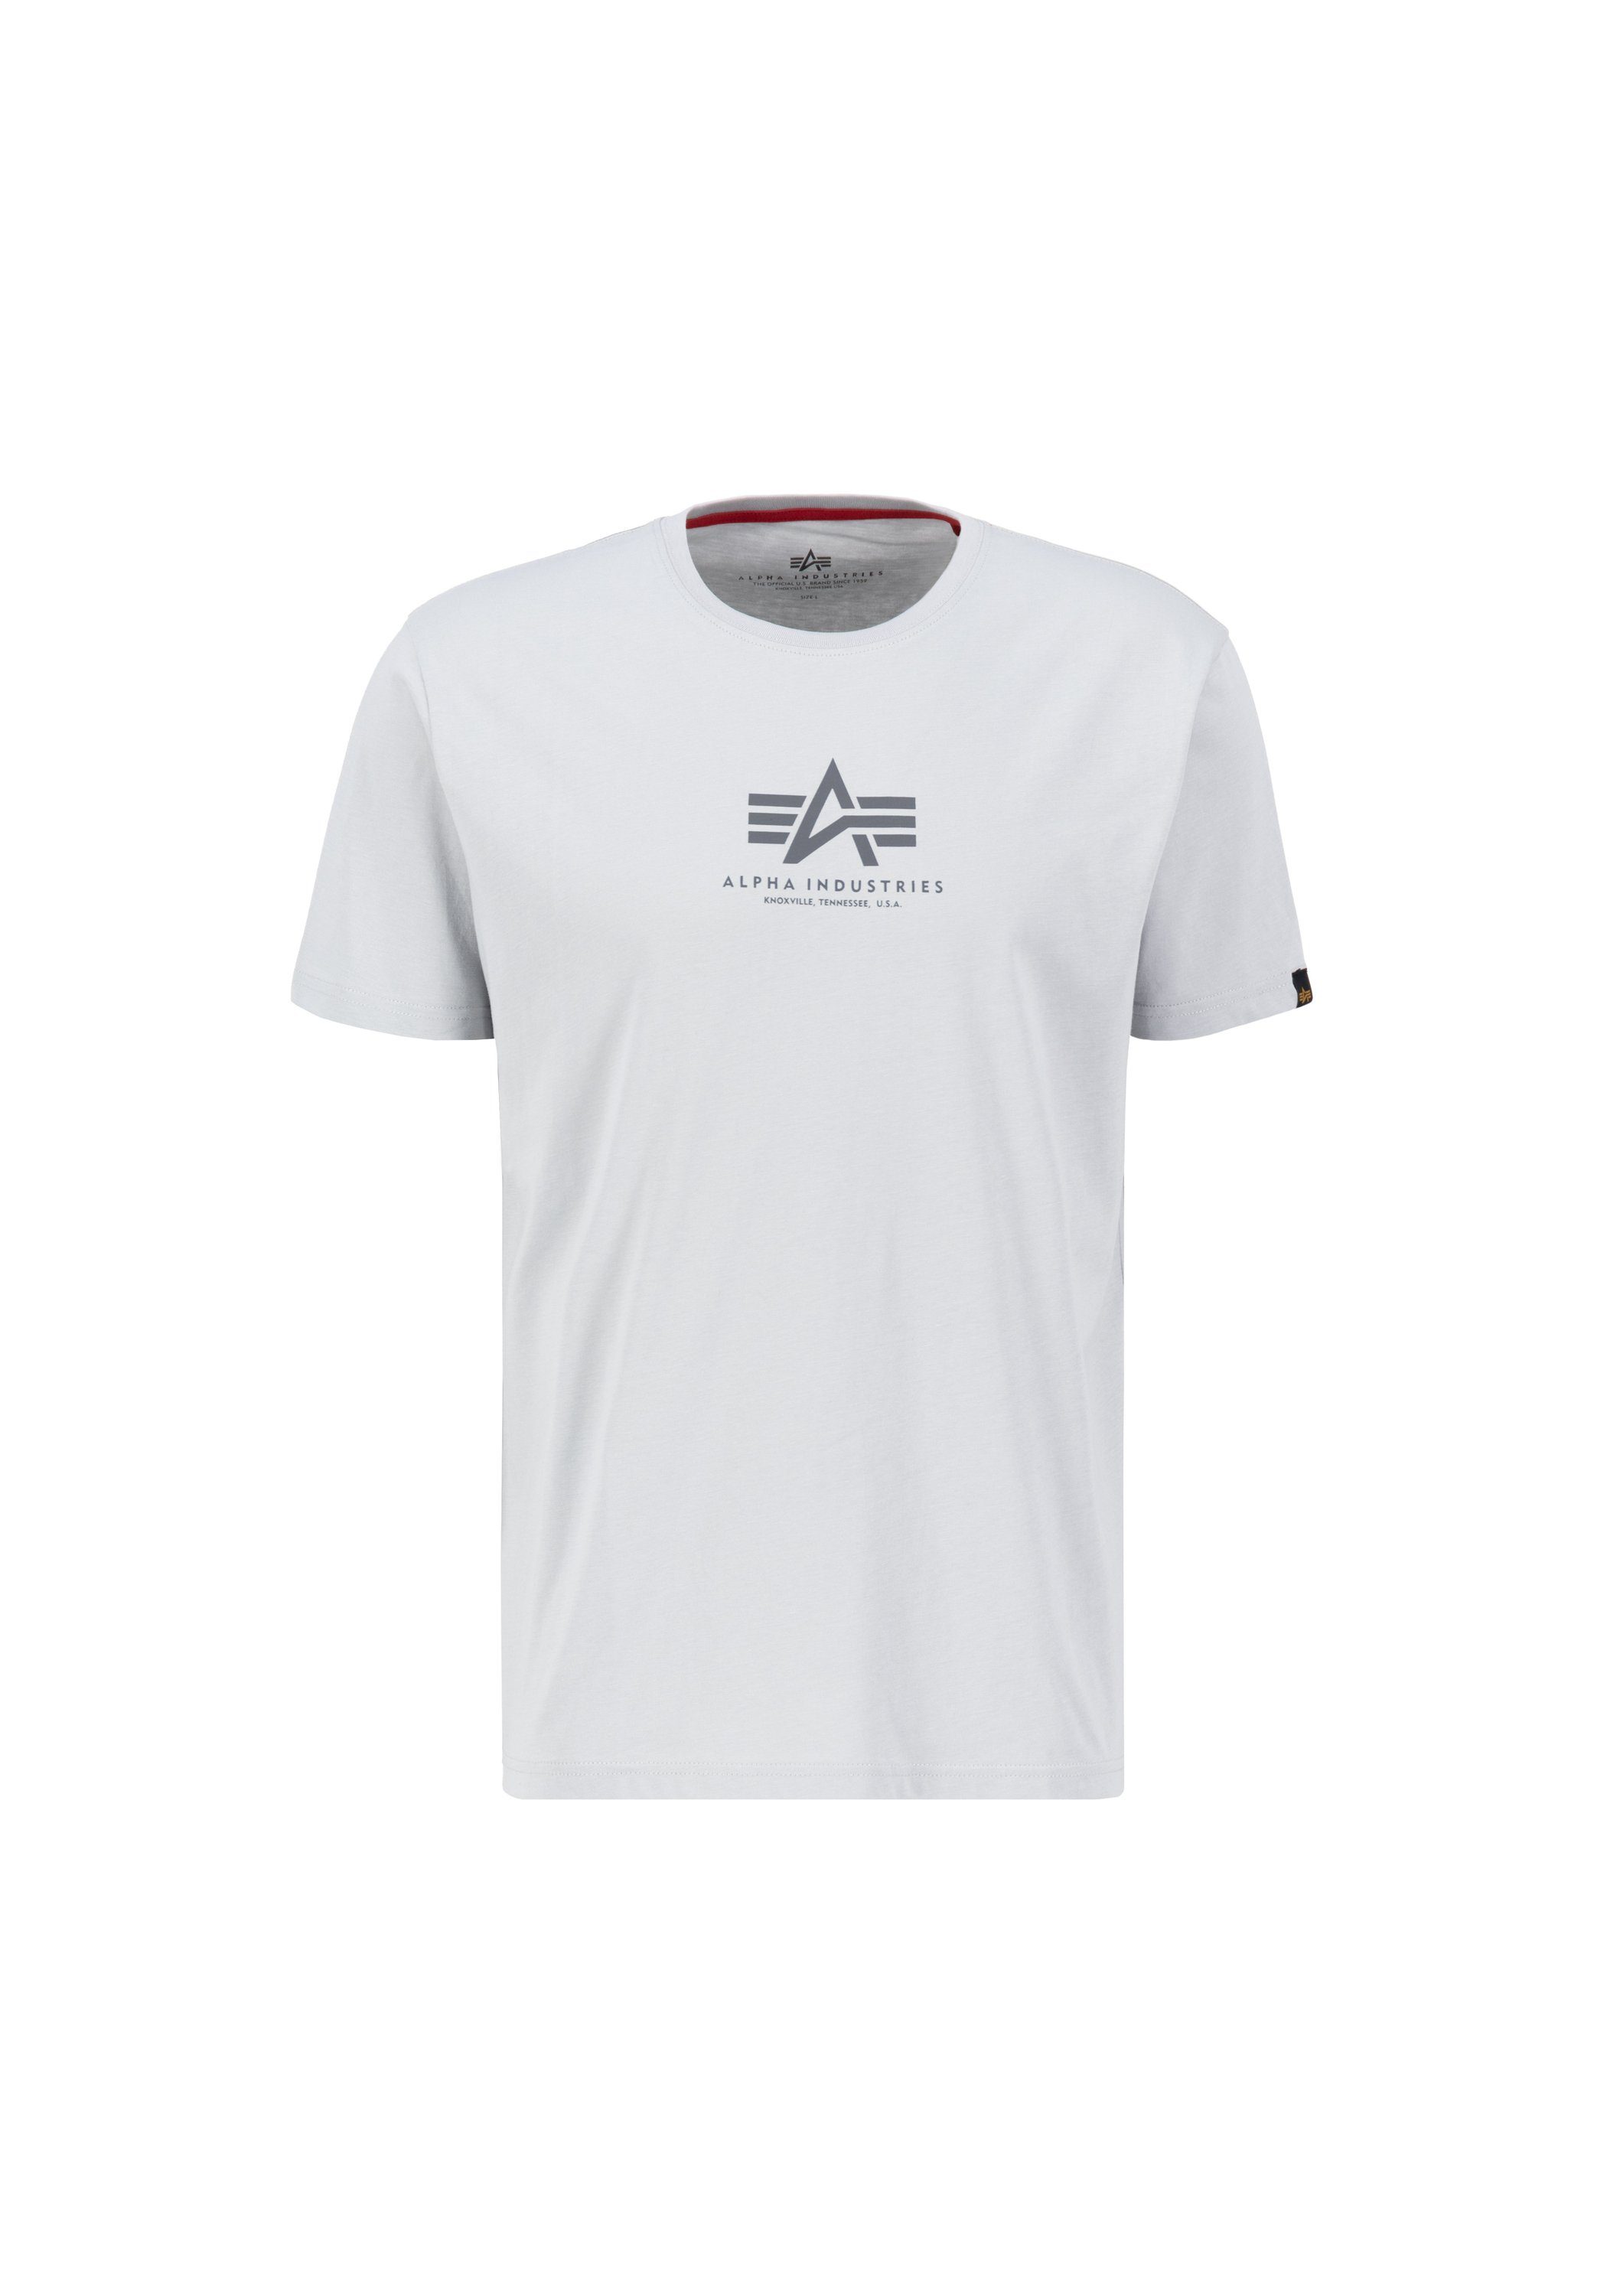 Basic Men ML Industries T T-Shirts grey Industries Alpha - Alpha T-Shirt pastel